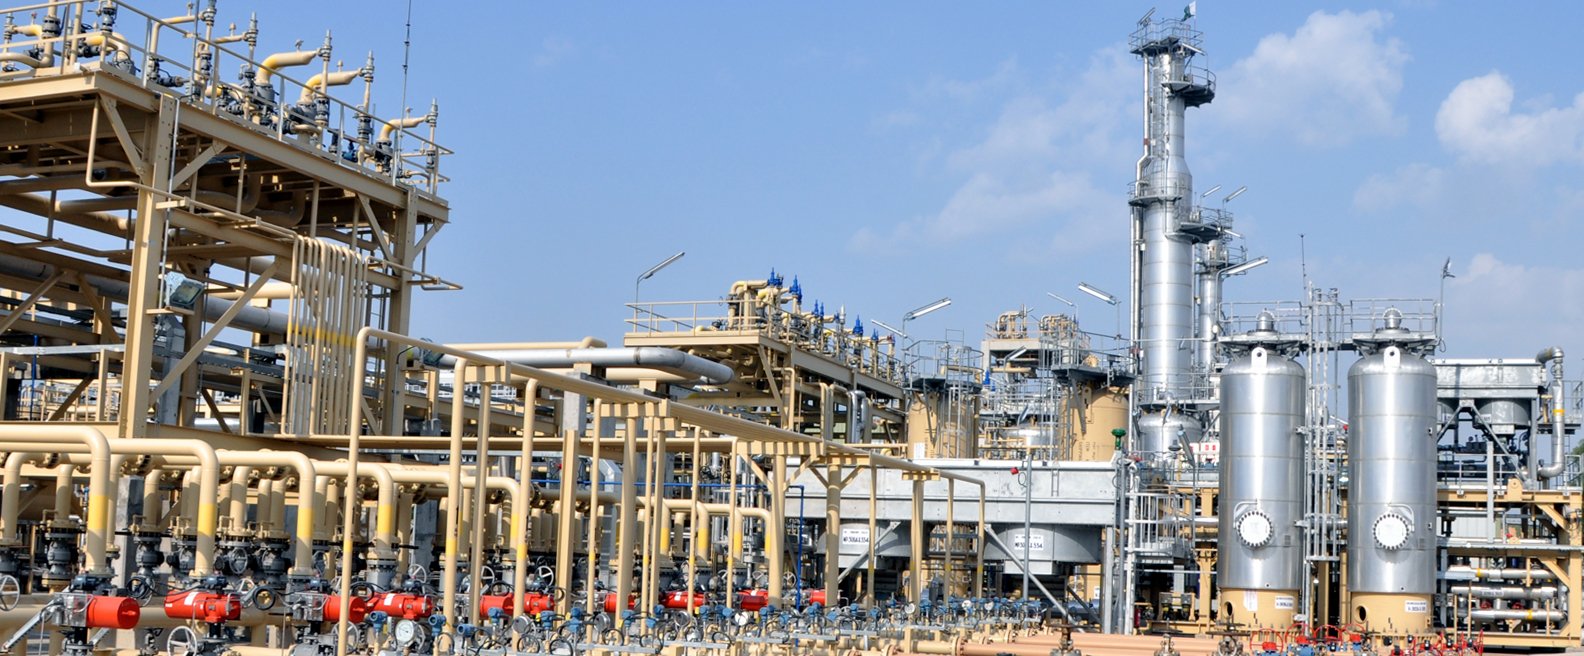 Gas Gathering Manifolds at LPG NGL Plant-III Adhi Field Punjab